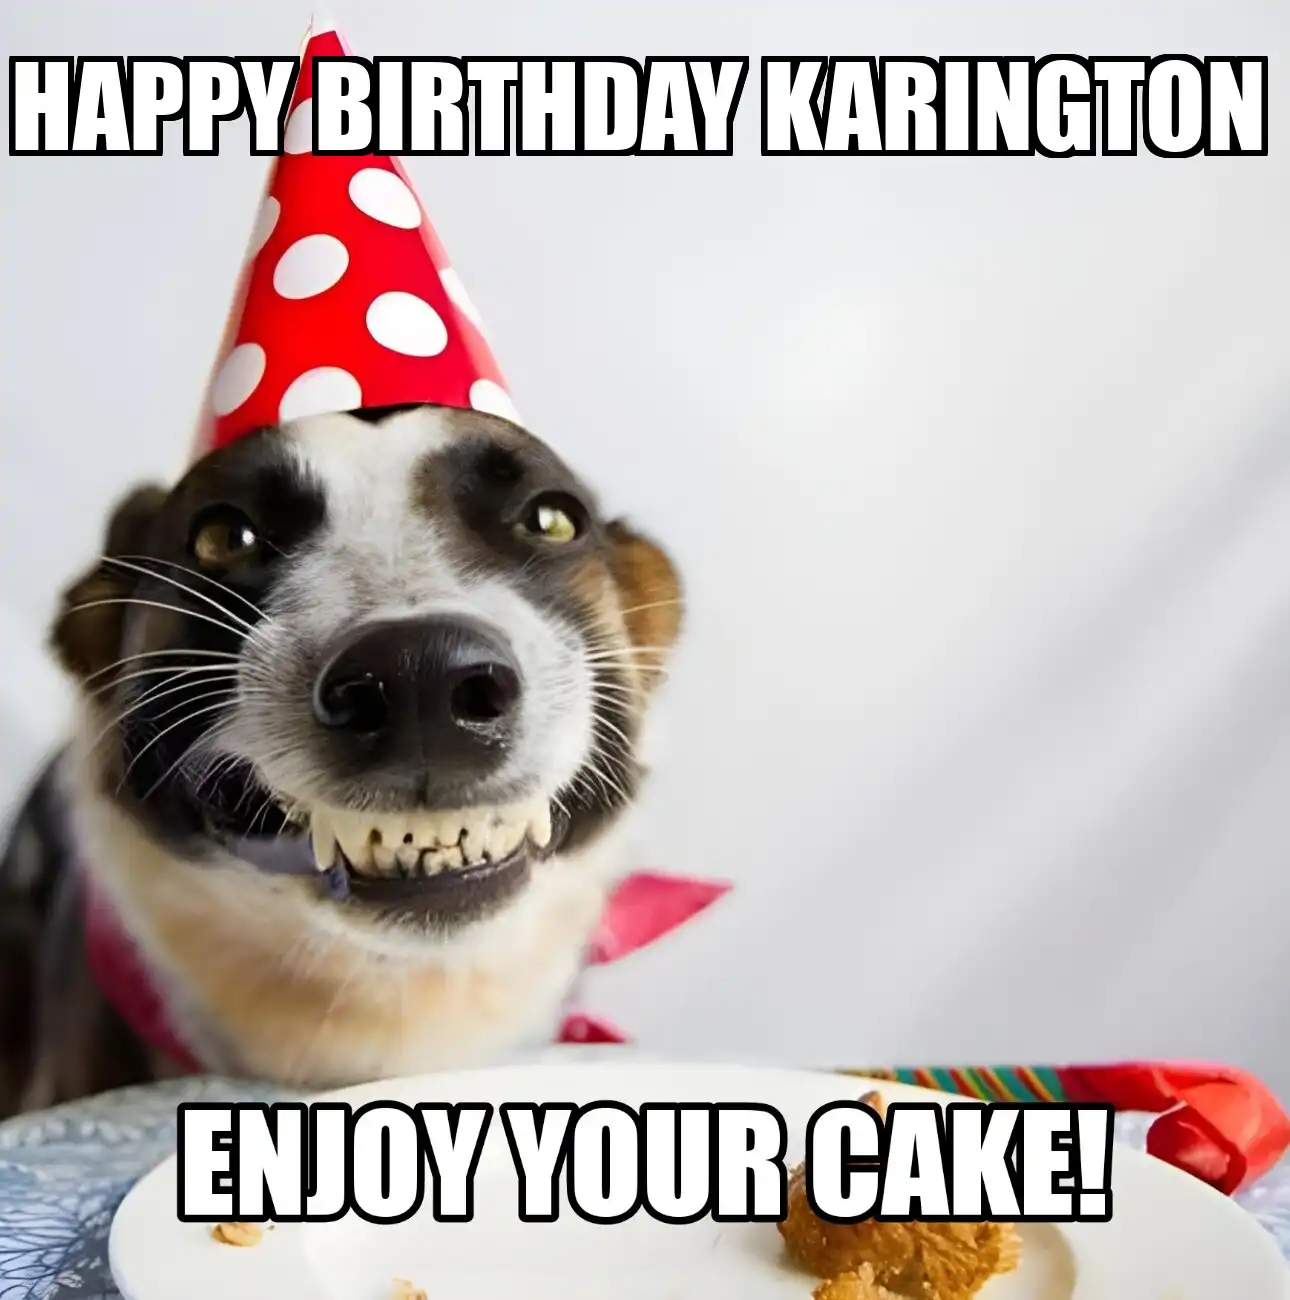 Happy Birthday Karington Enjoy Your Cake Dog Meme